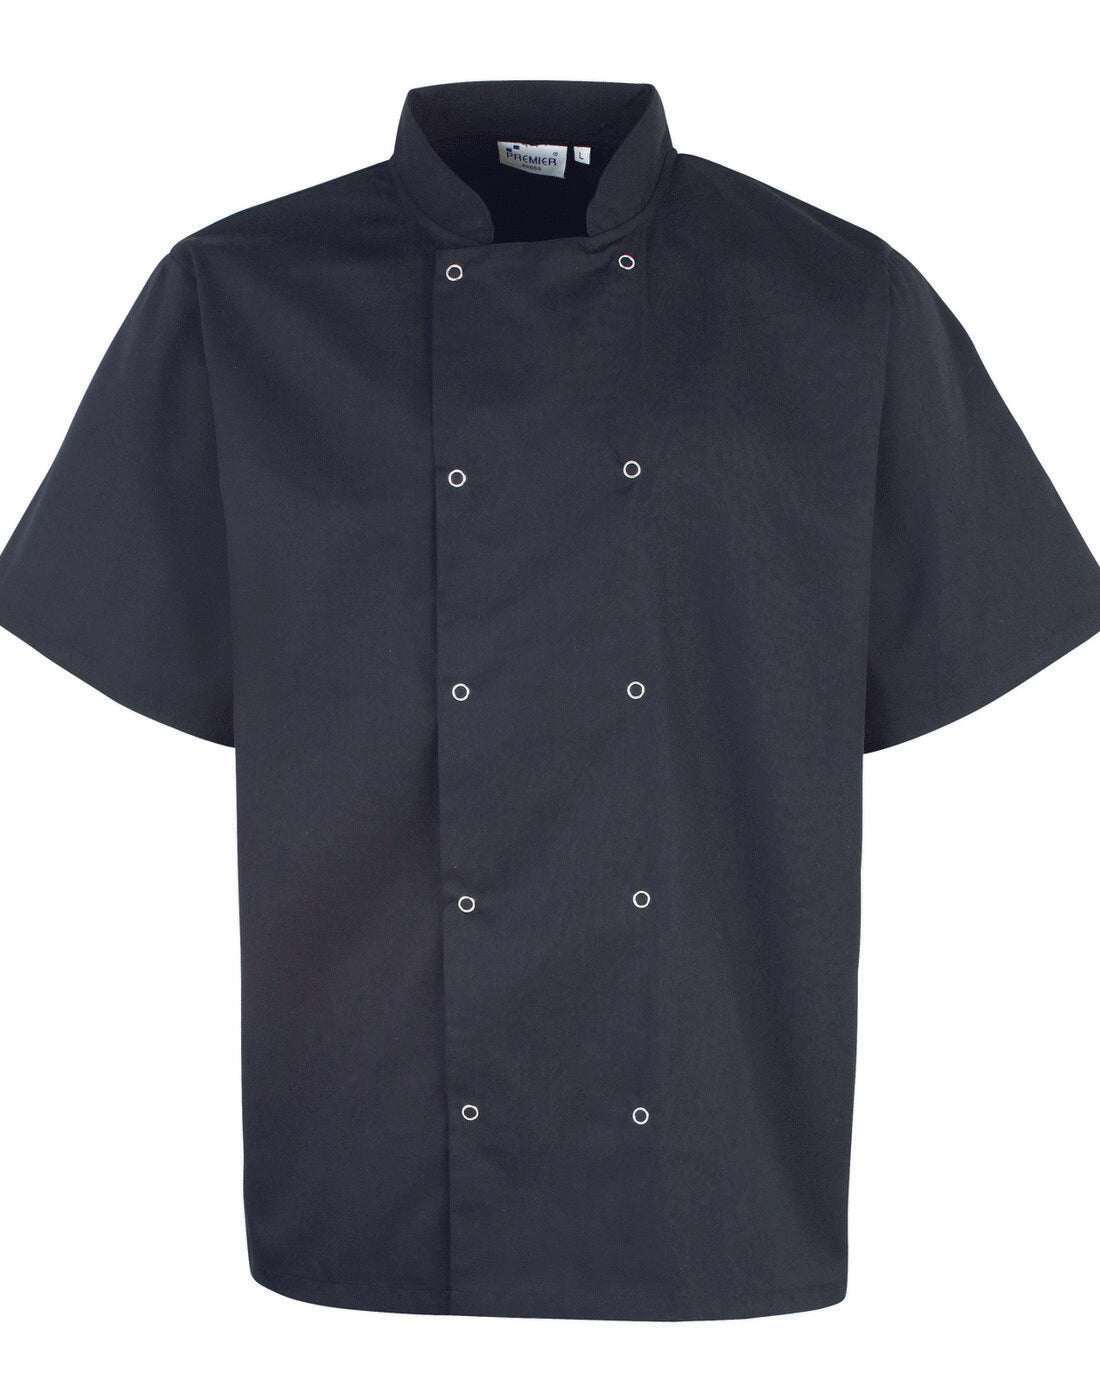 Premier Chef's Short Sleeve Stud Jacket